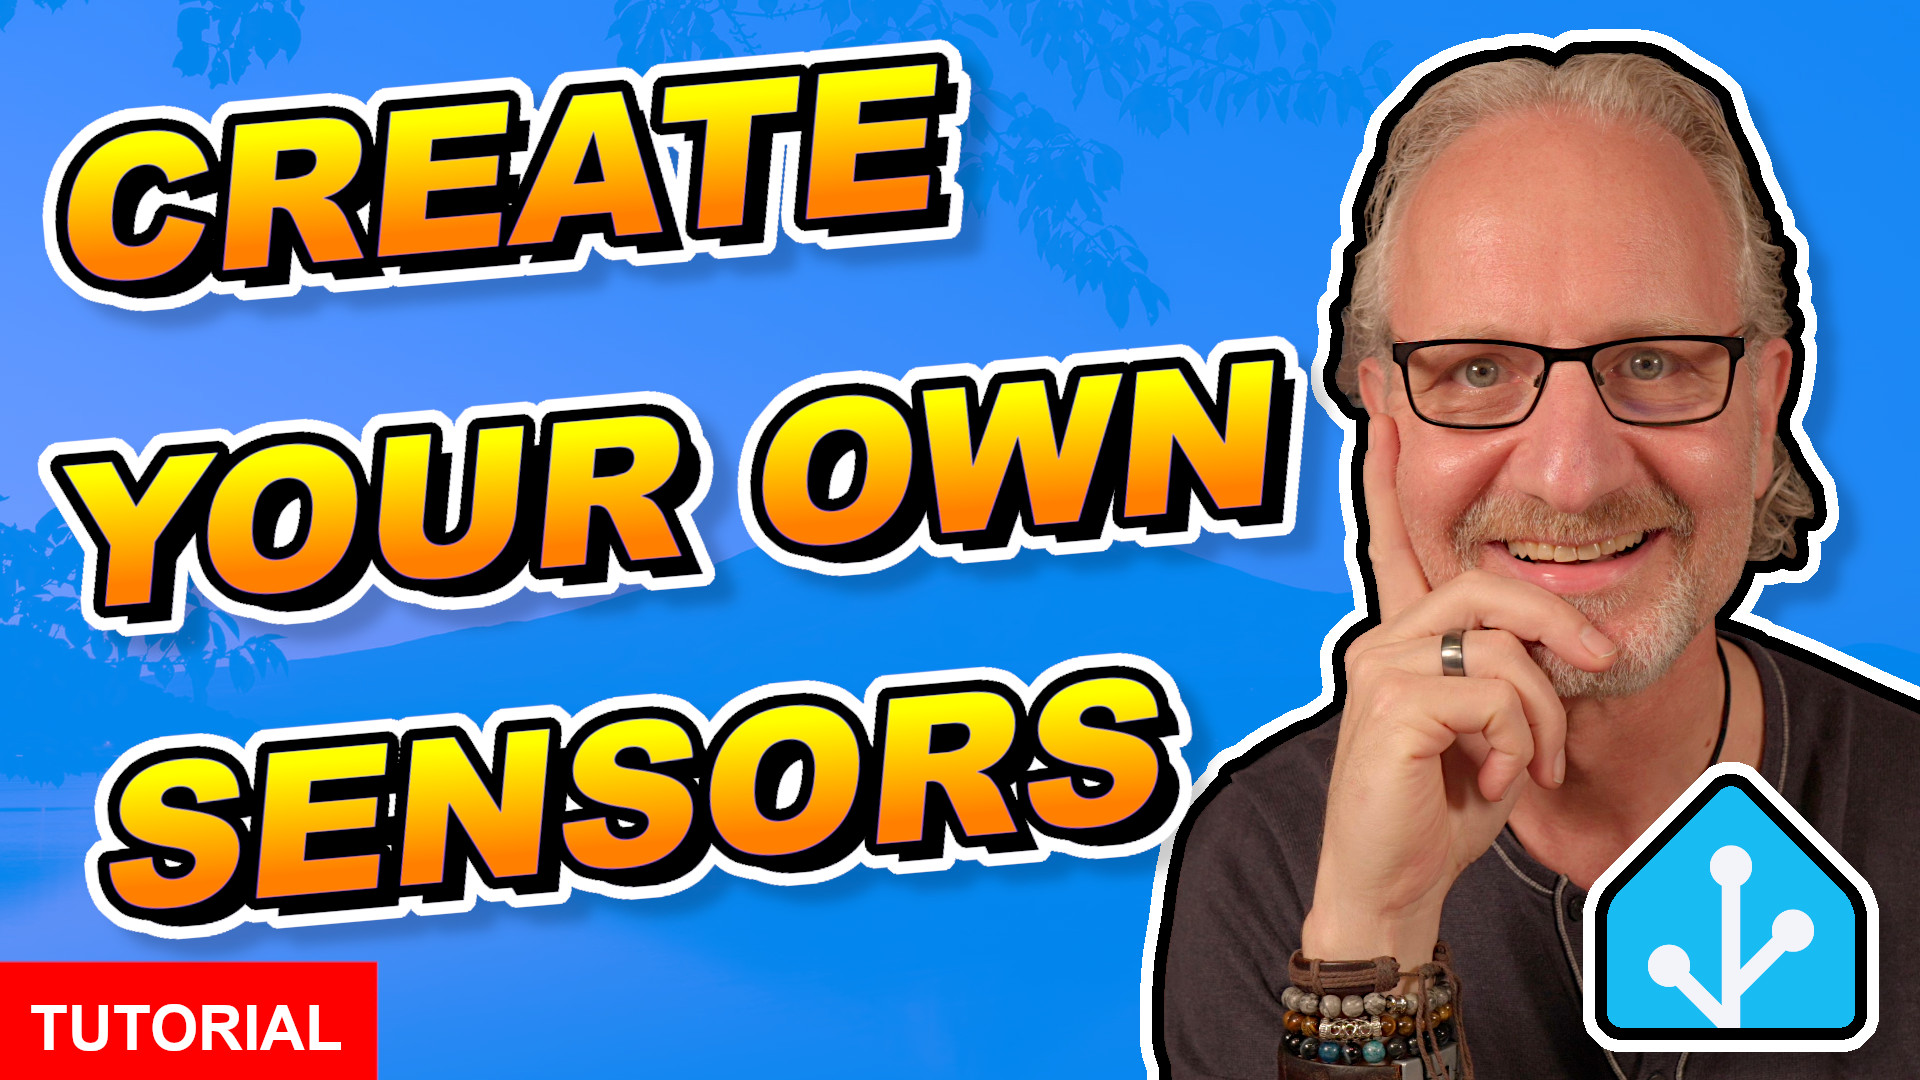 YAML & Jinja Templating Course Episode 7: Create your own Sensors!